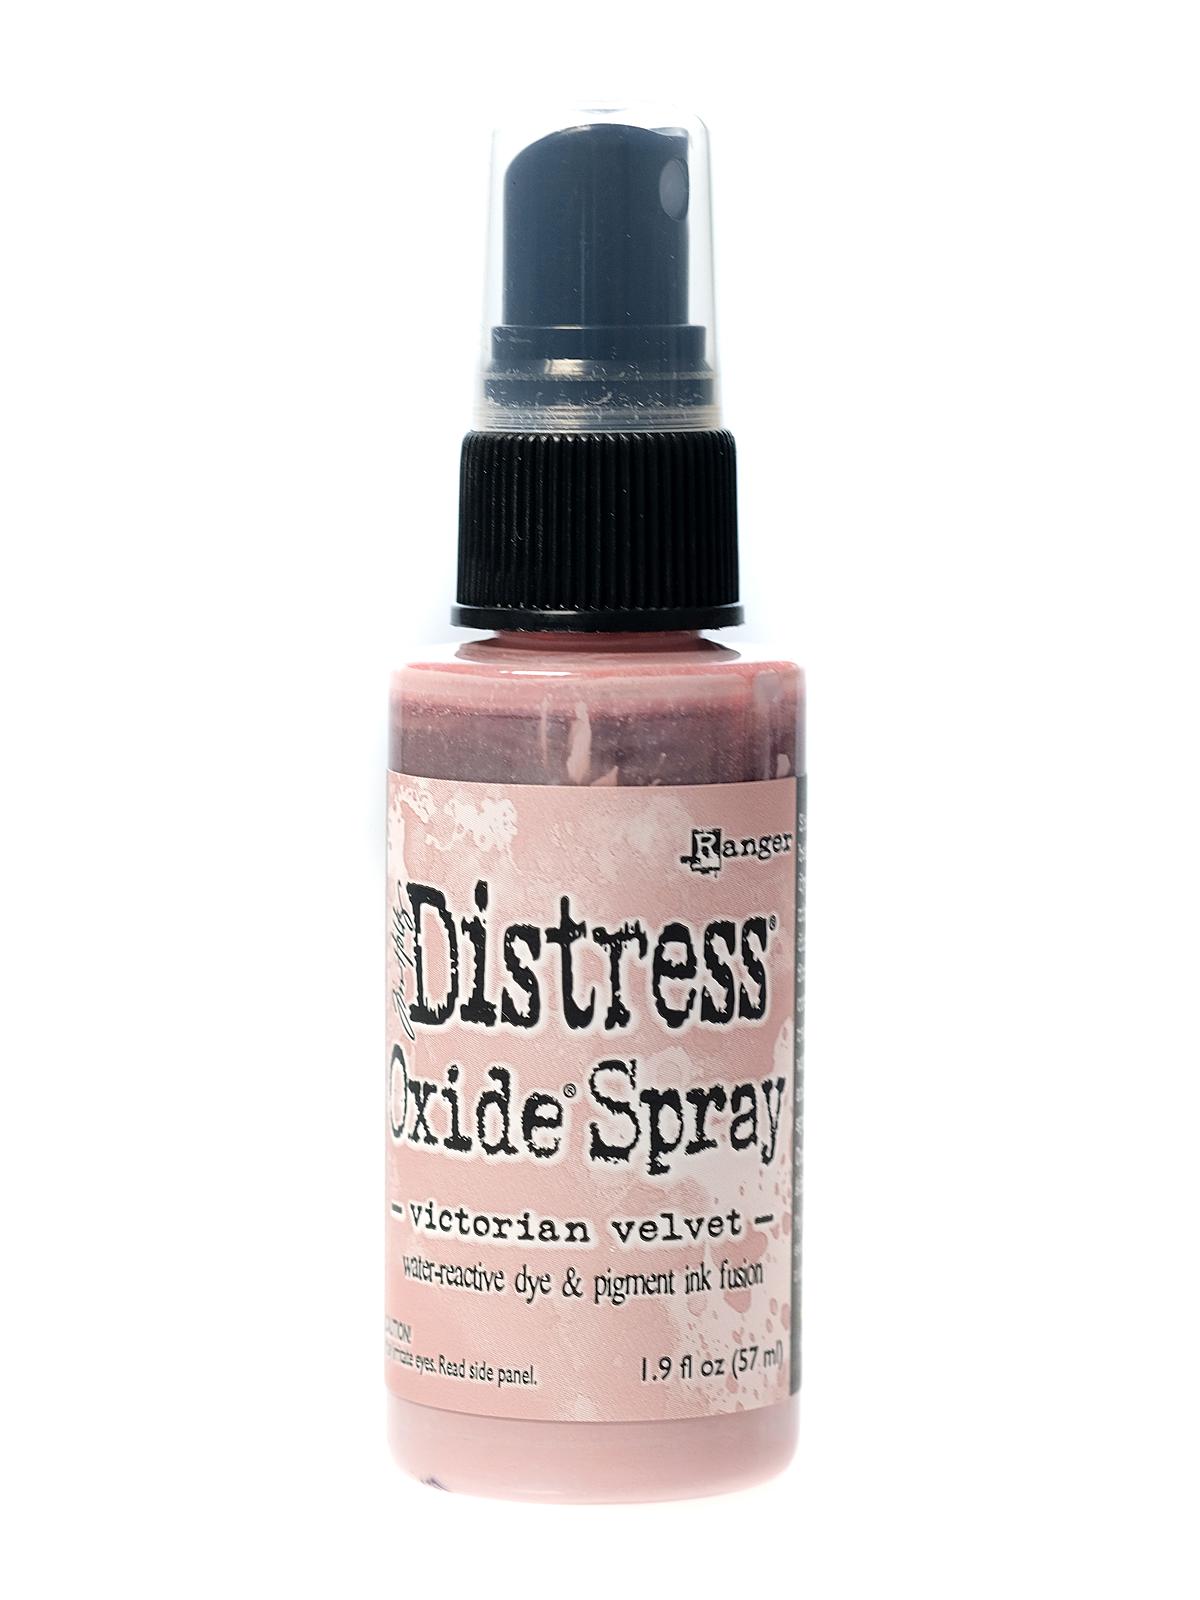 Tim Holtz Distress Oxide Sprays Victorian Velvet 2 Oz. Bottle